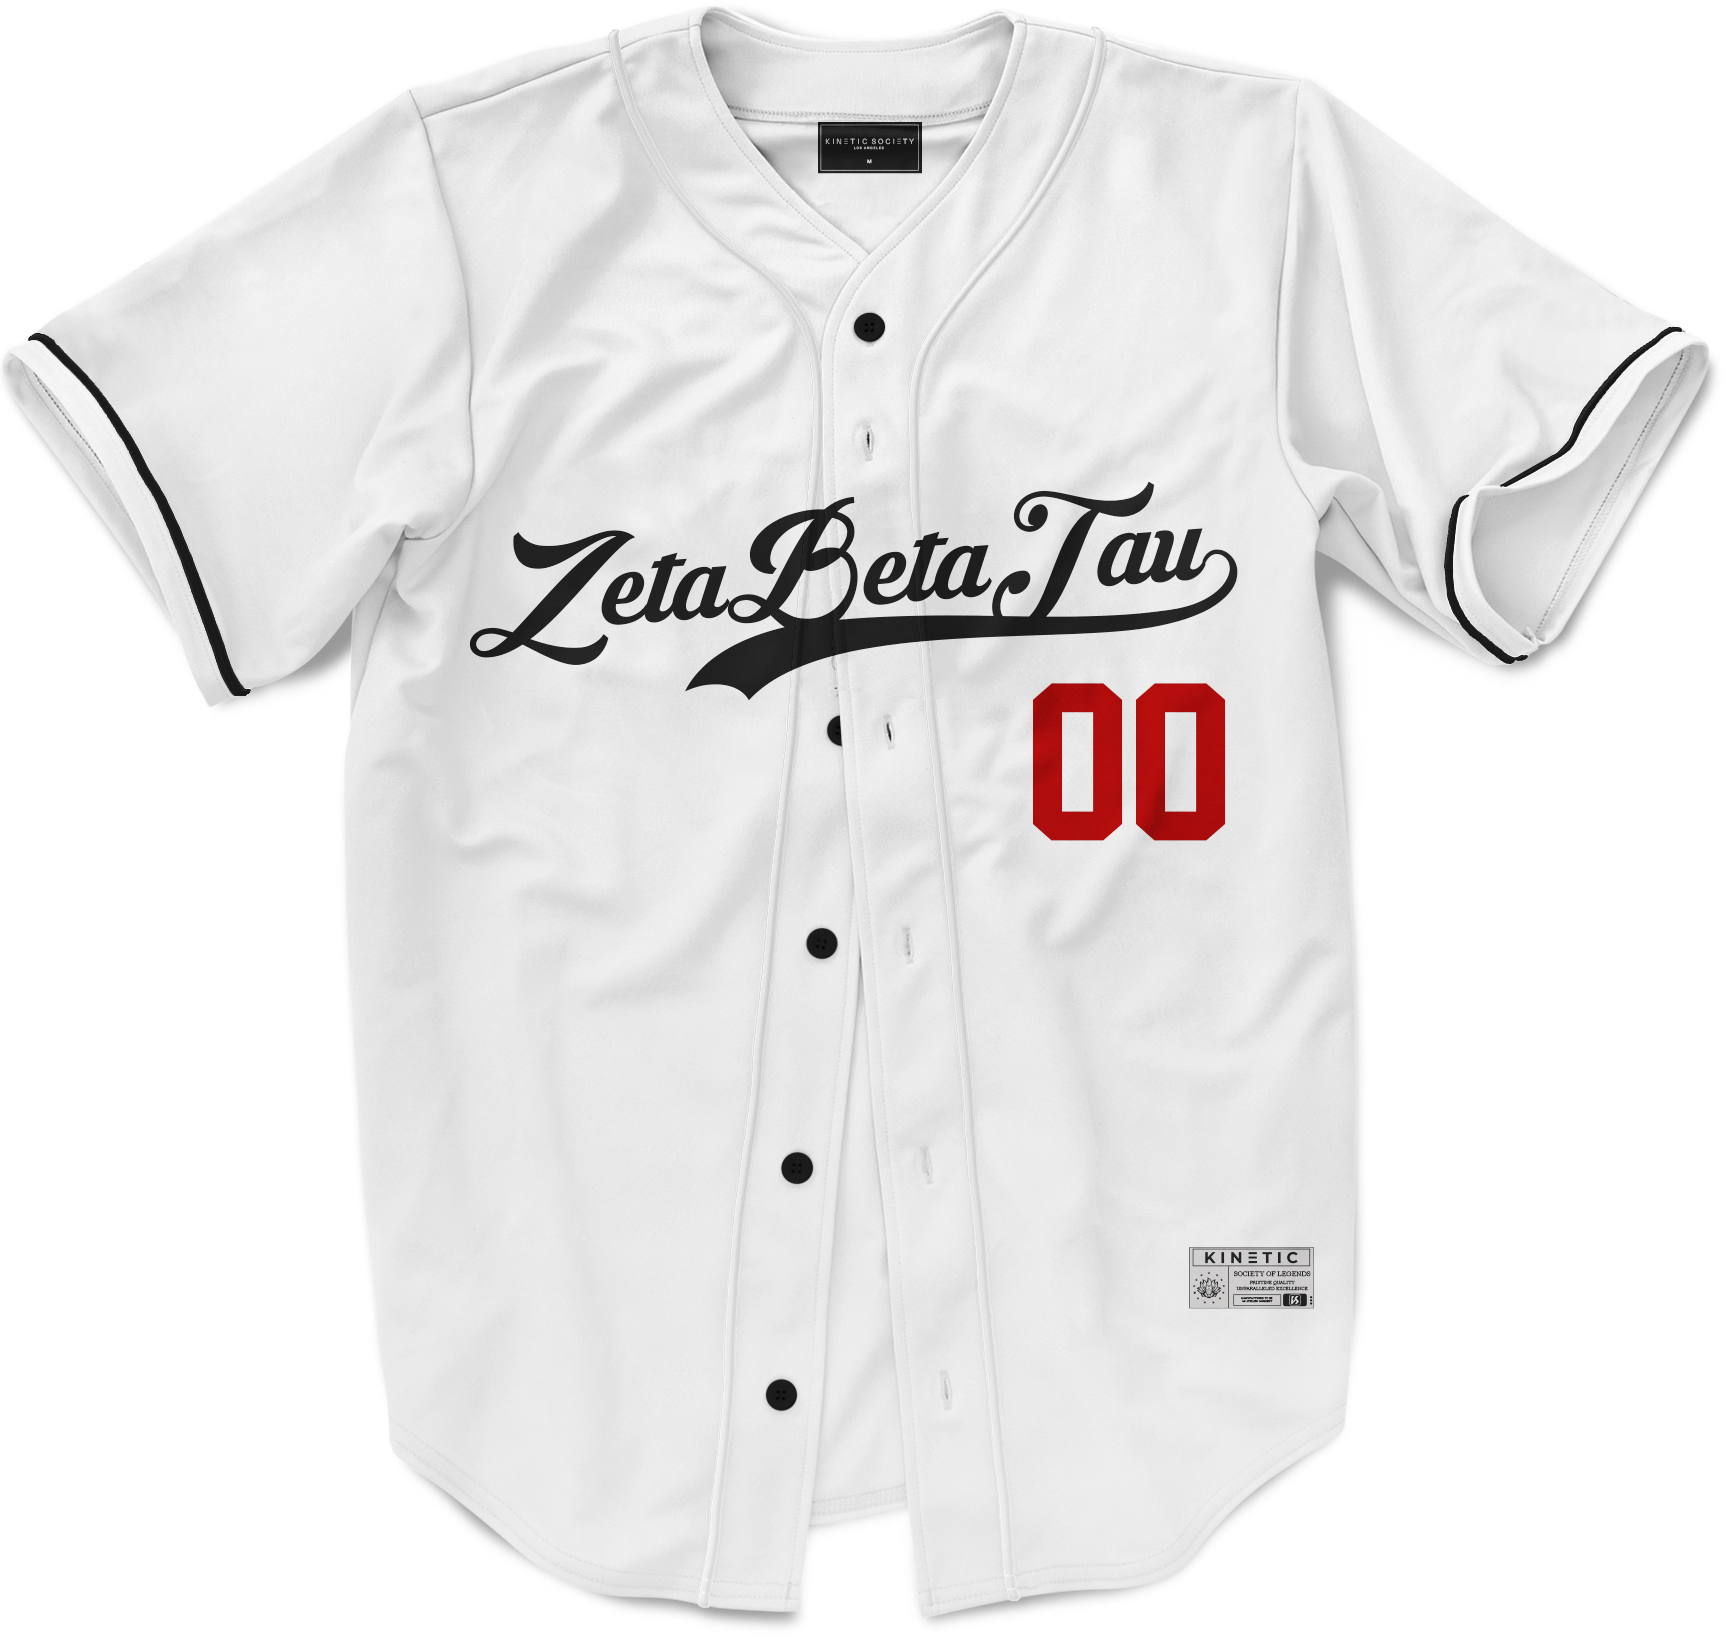 Zeta Beta Tau - Classic Ballpark Red Baseball Jersey